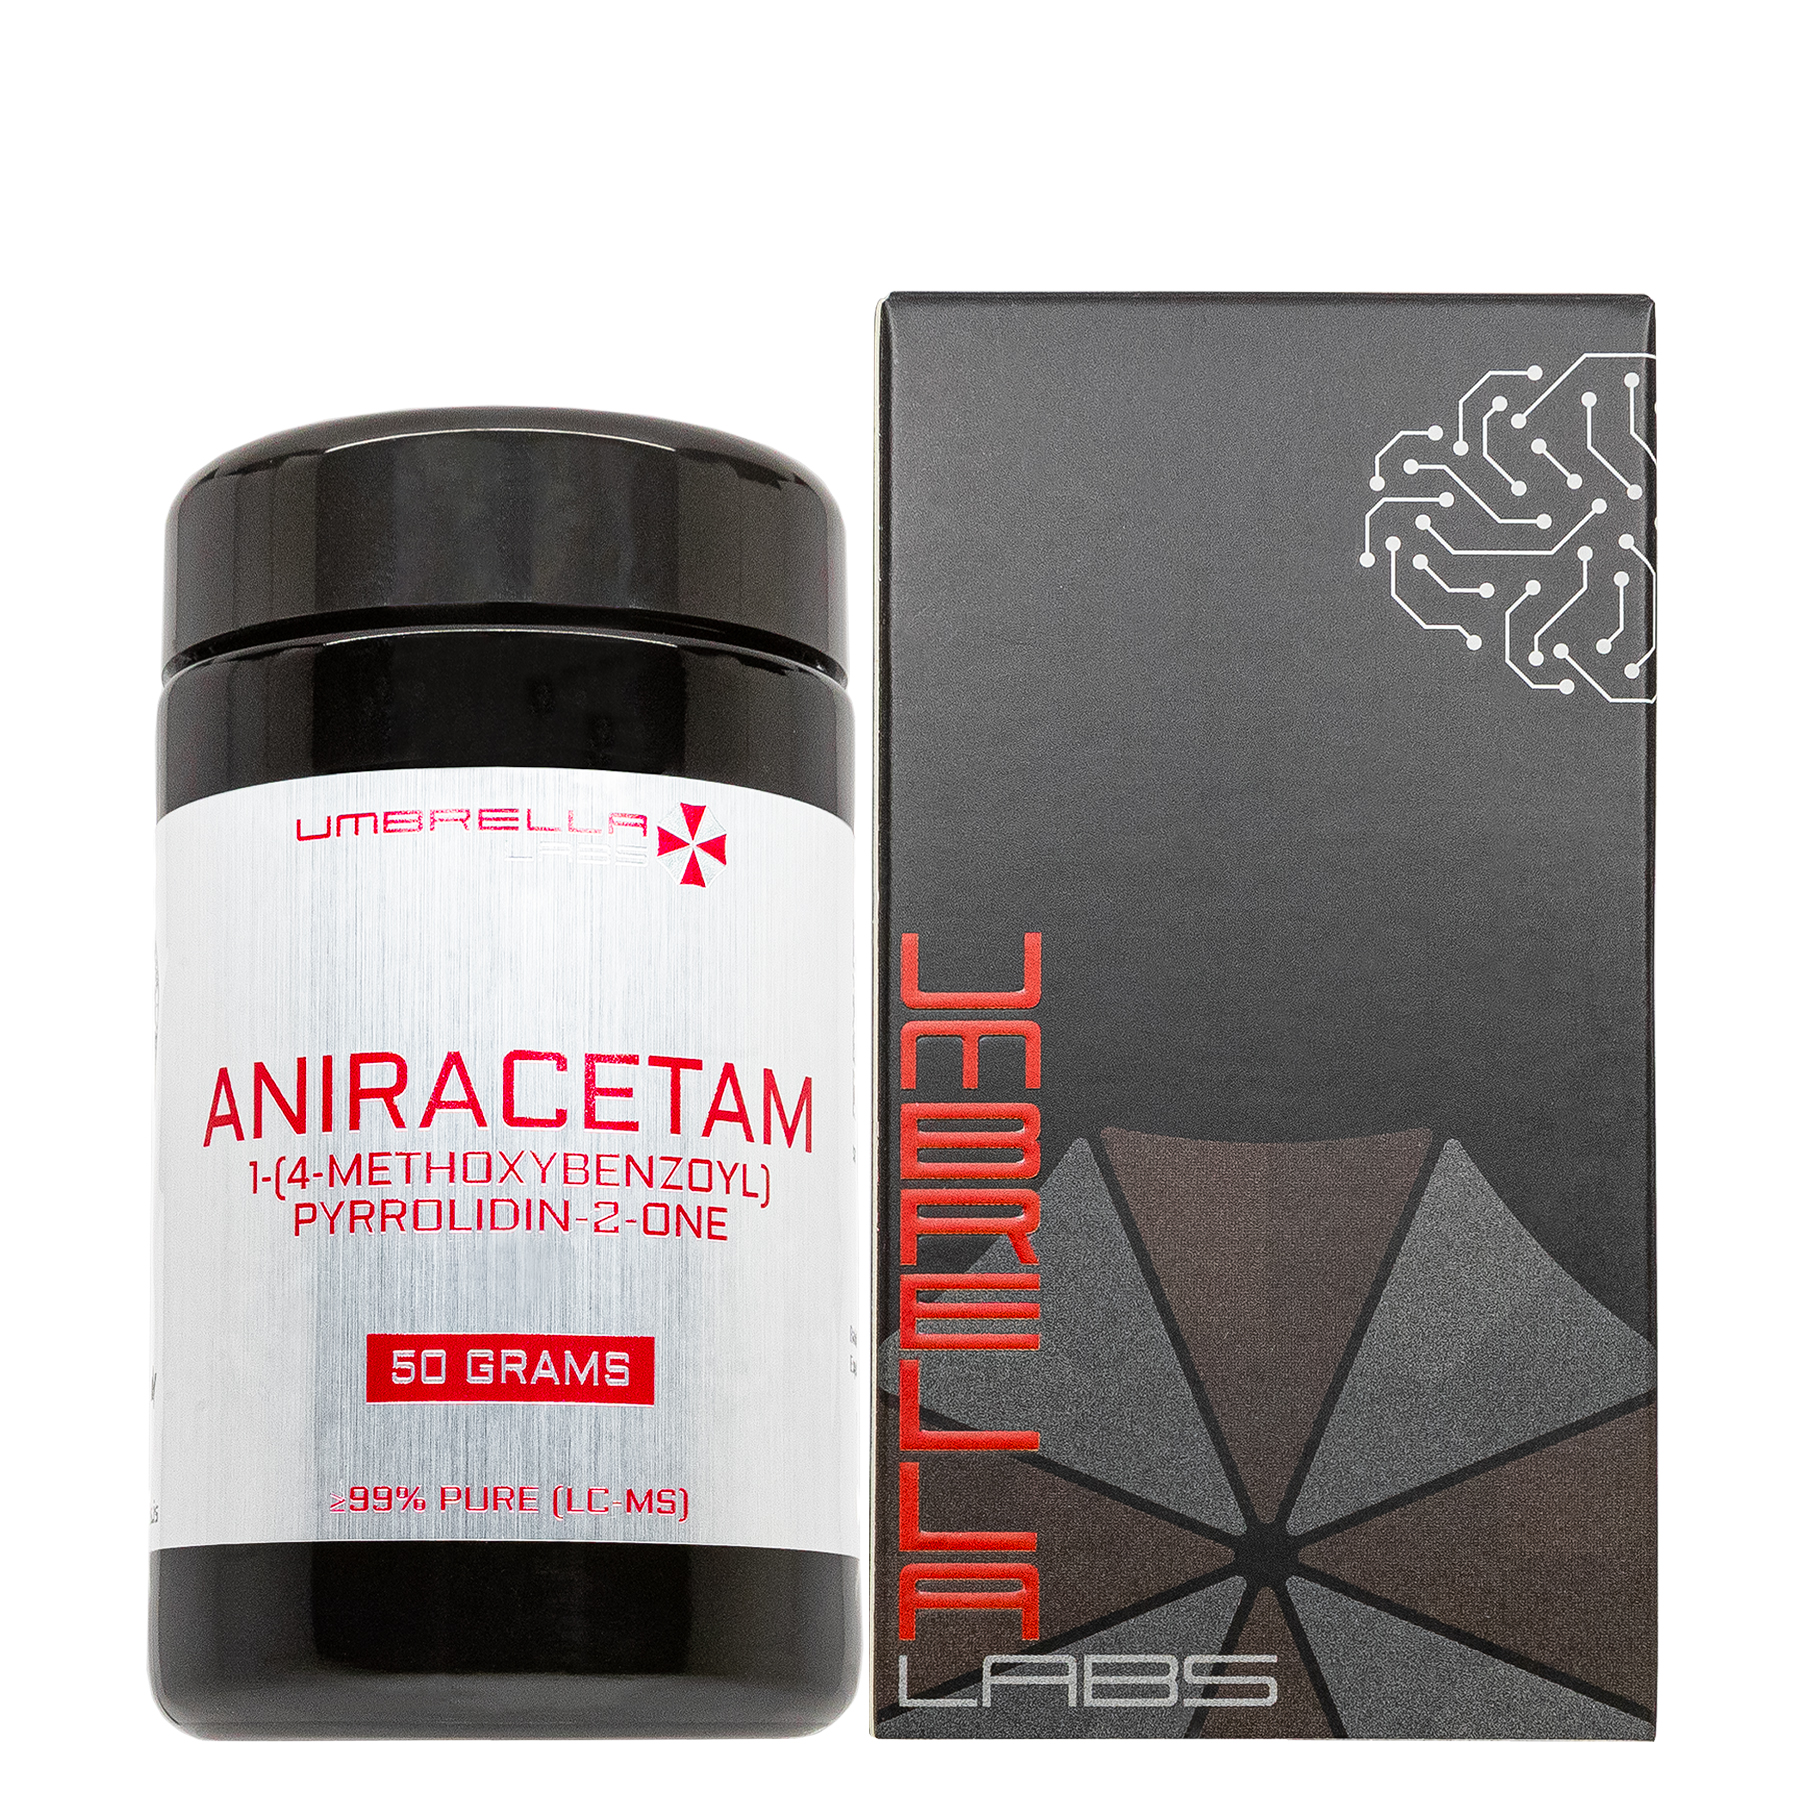 aniracetam powder (50 grams)